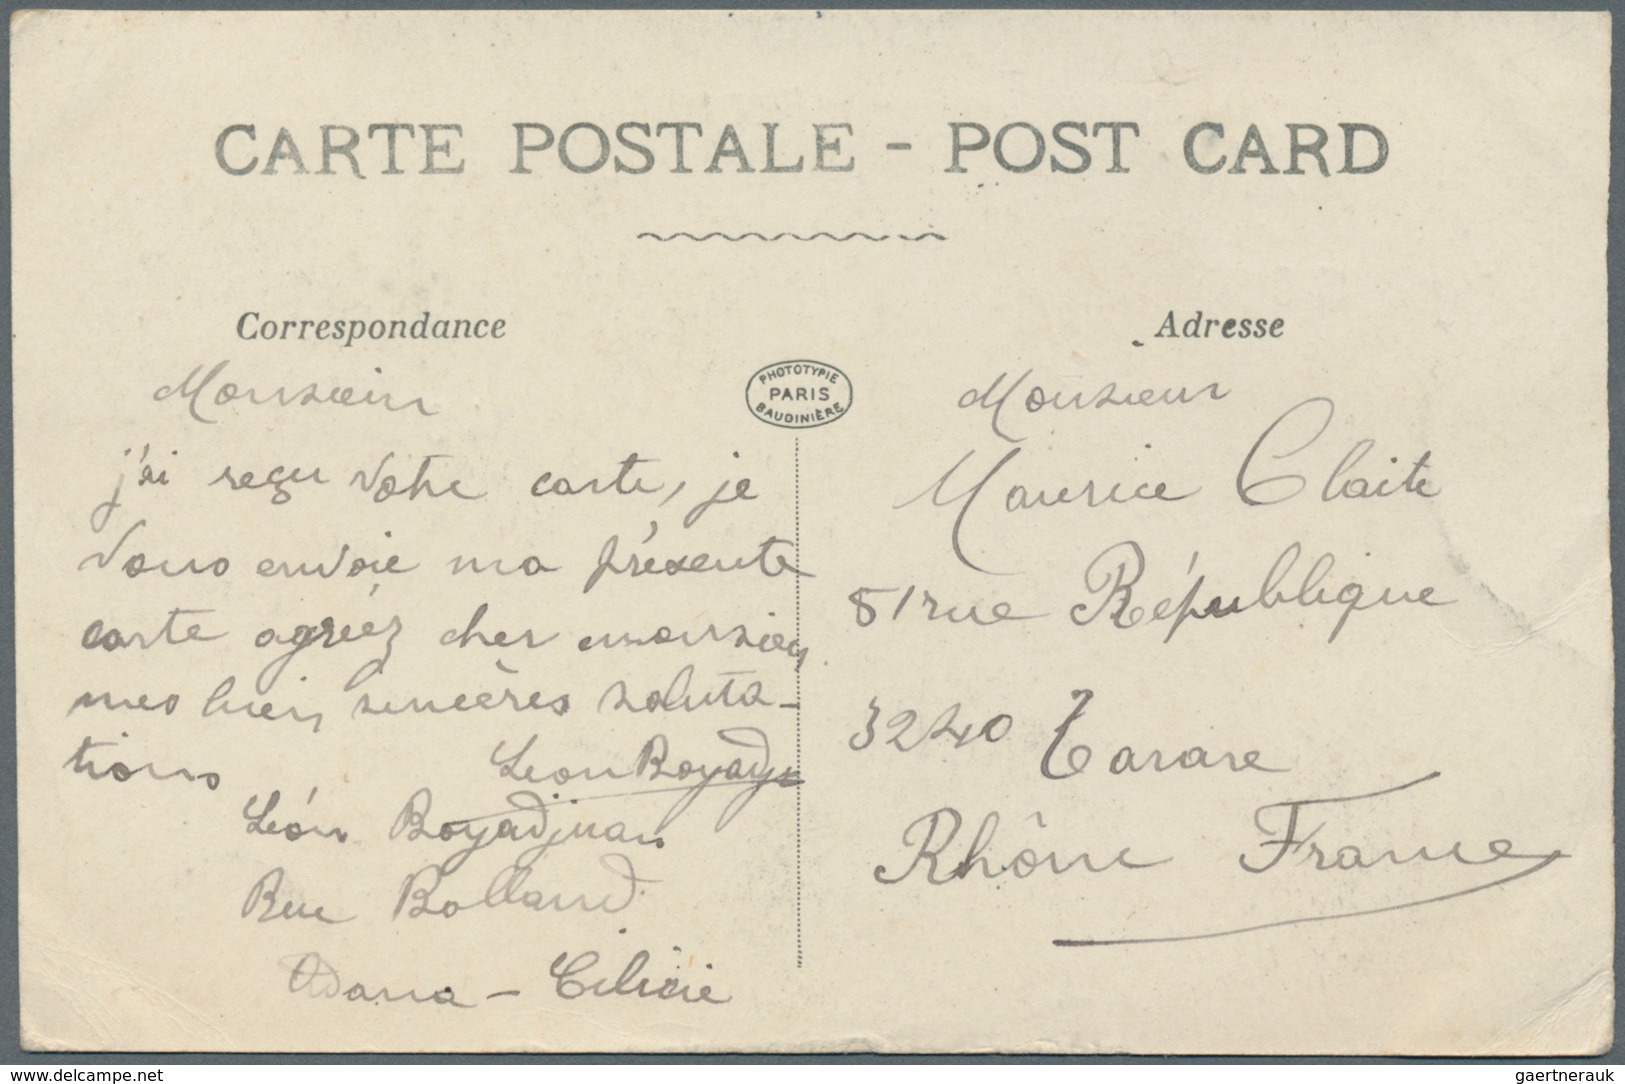 Türkei - Cilicien: 1919. Picture Post Card Of 'Mizrahi, Adana' Addressed To France Bearing Cilicie Y - 1920-21 Kleinasien